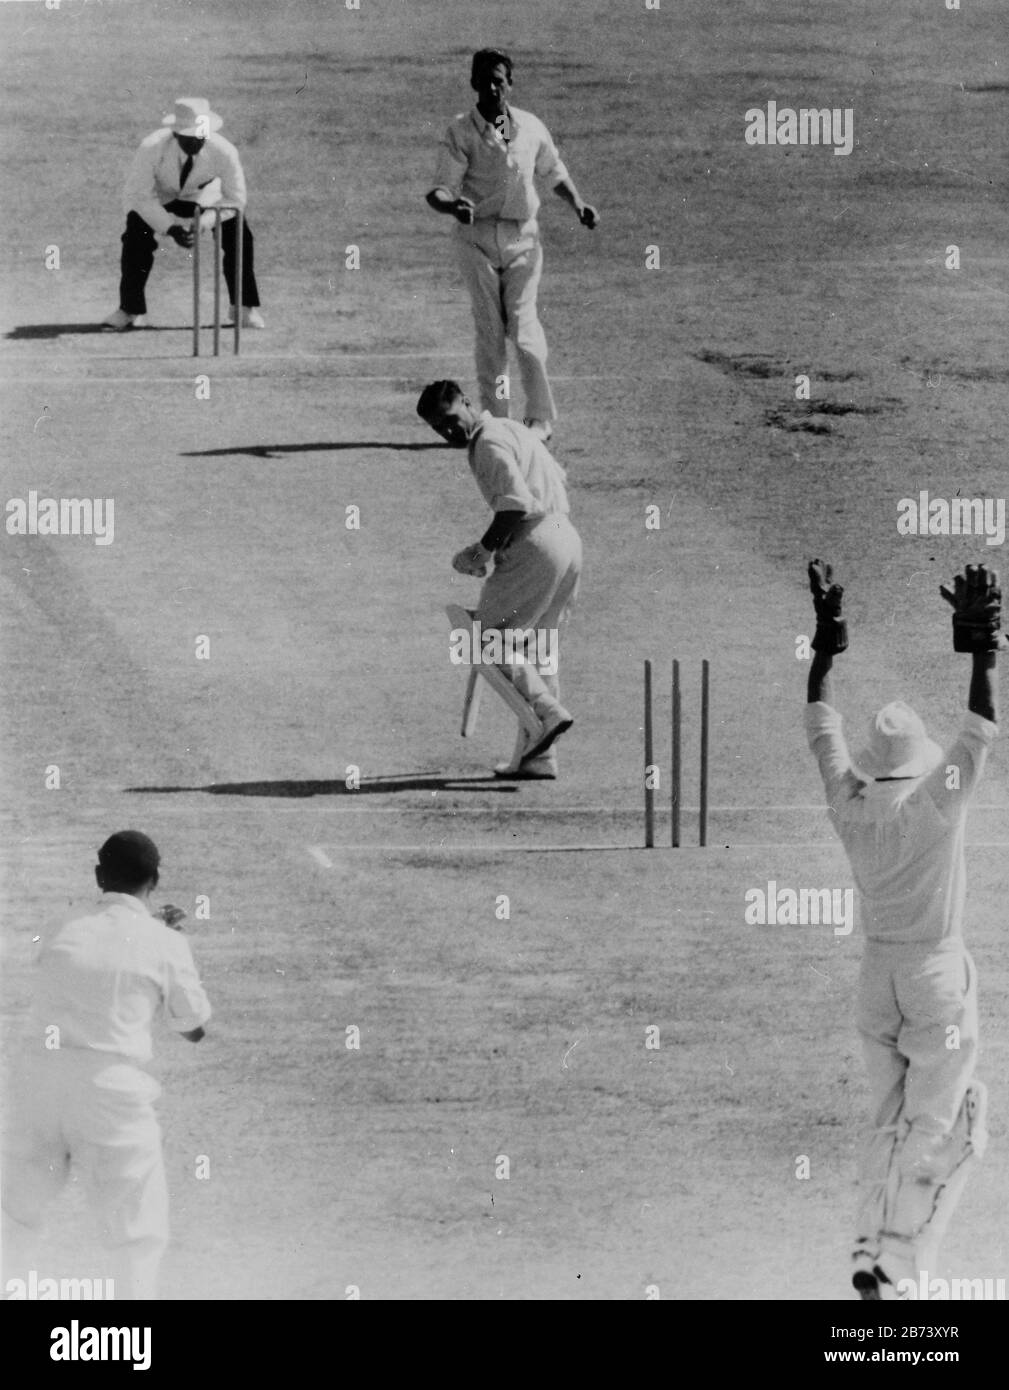 neil harvey, brian statham, cricket, brisbane 1962 Foto Stock